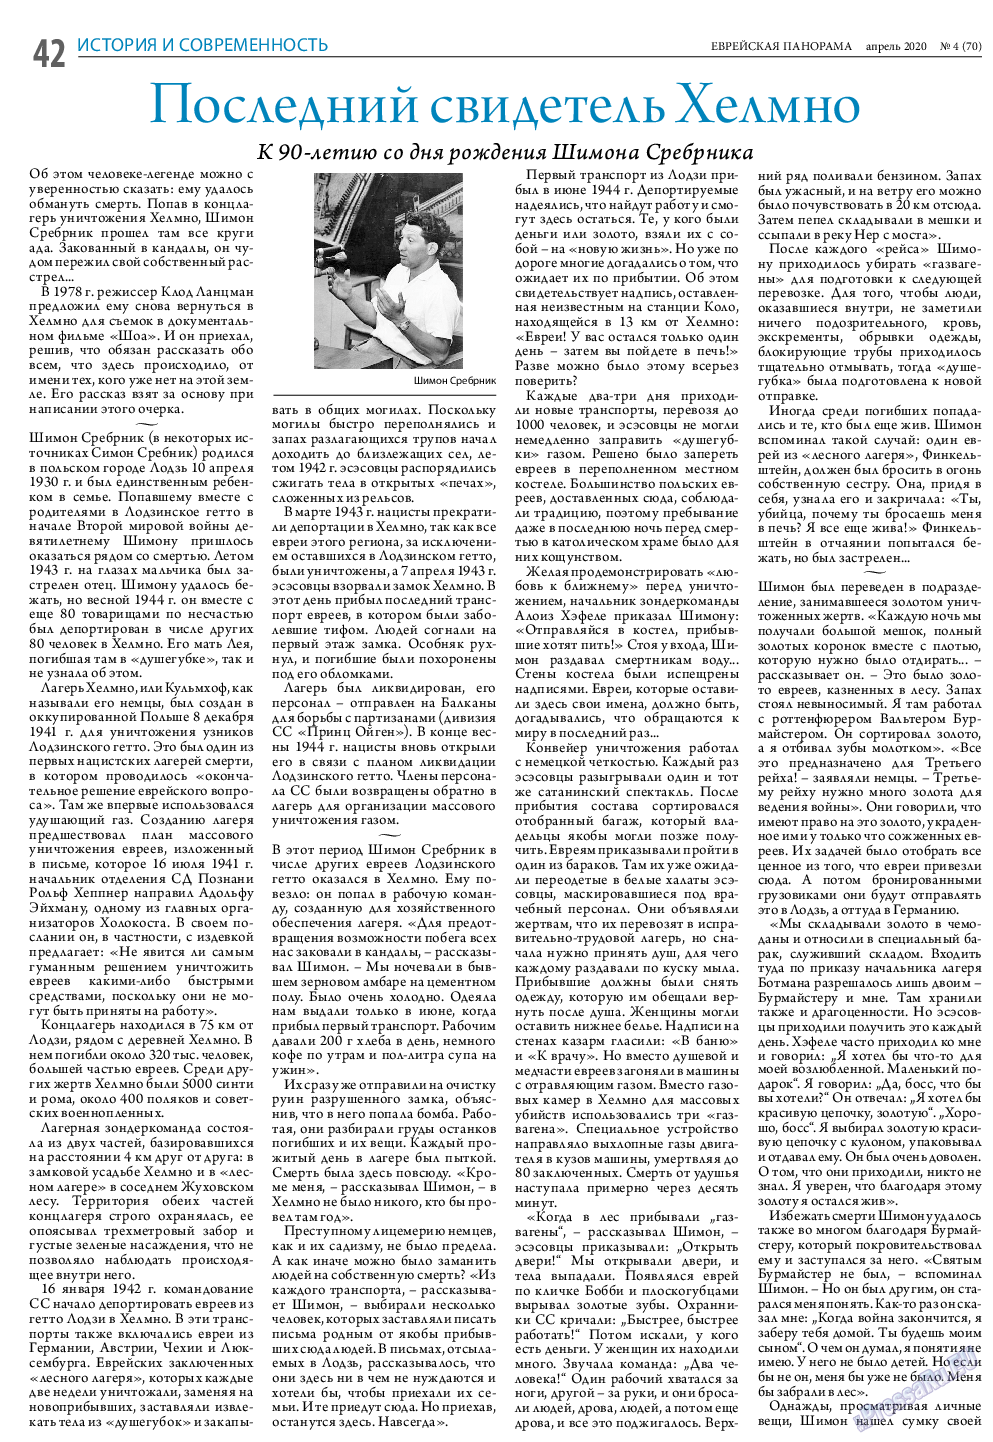 Еврейская панорама, газета. 2020 №4 стр.42